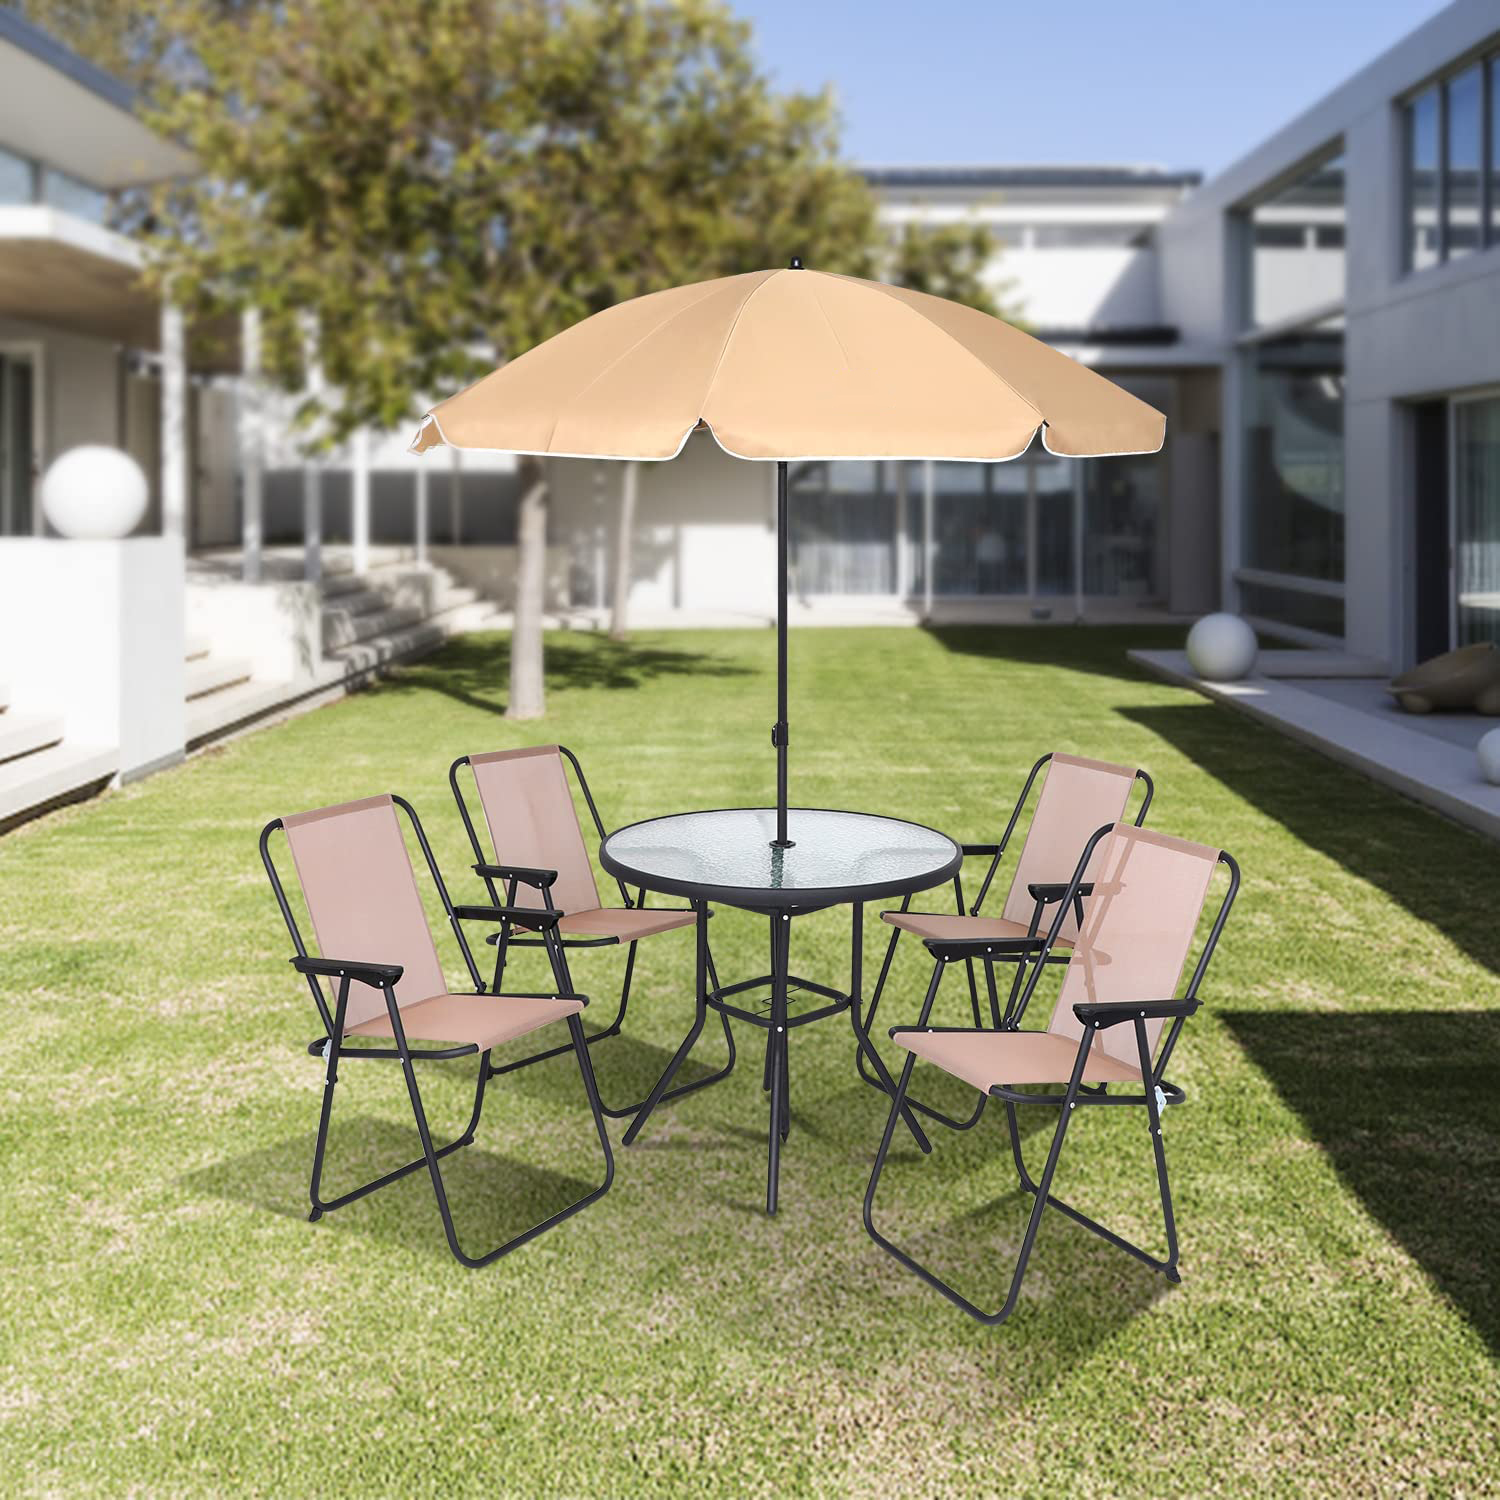 6 Piece Garden Outdoor Folding Table and Chair Furniture Set with tilt Parasol umbrella